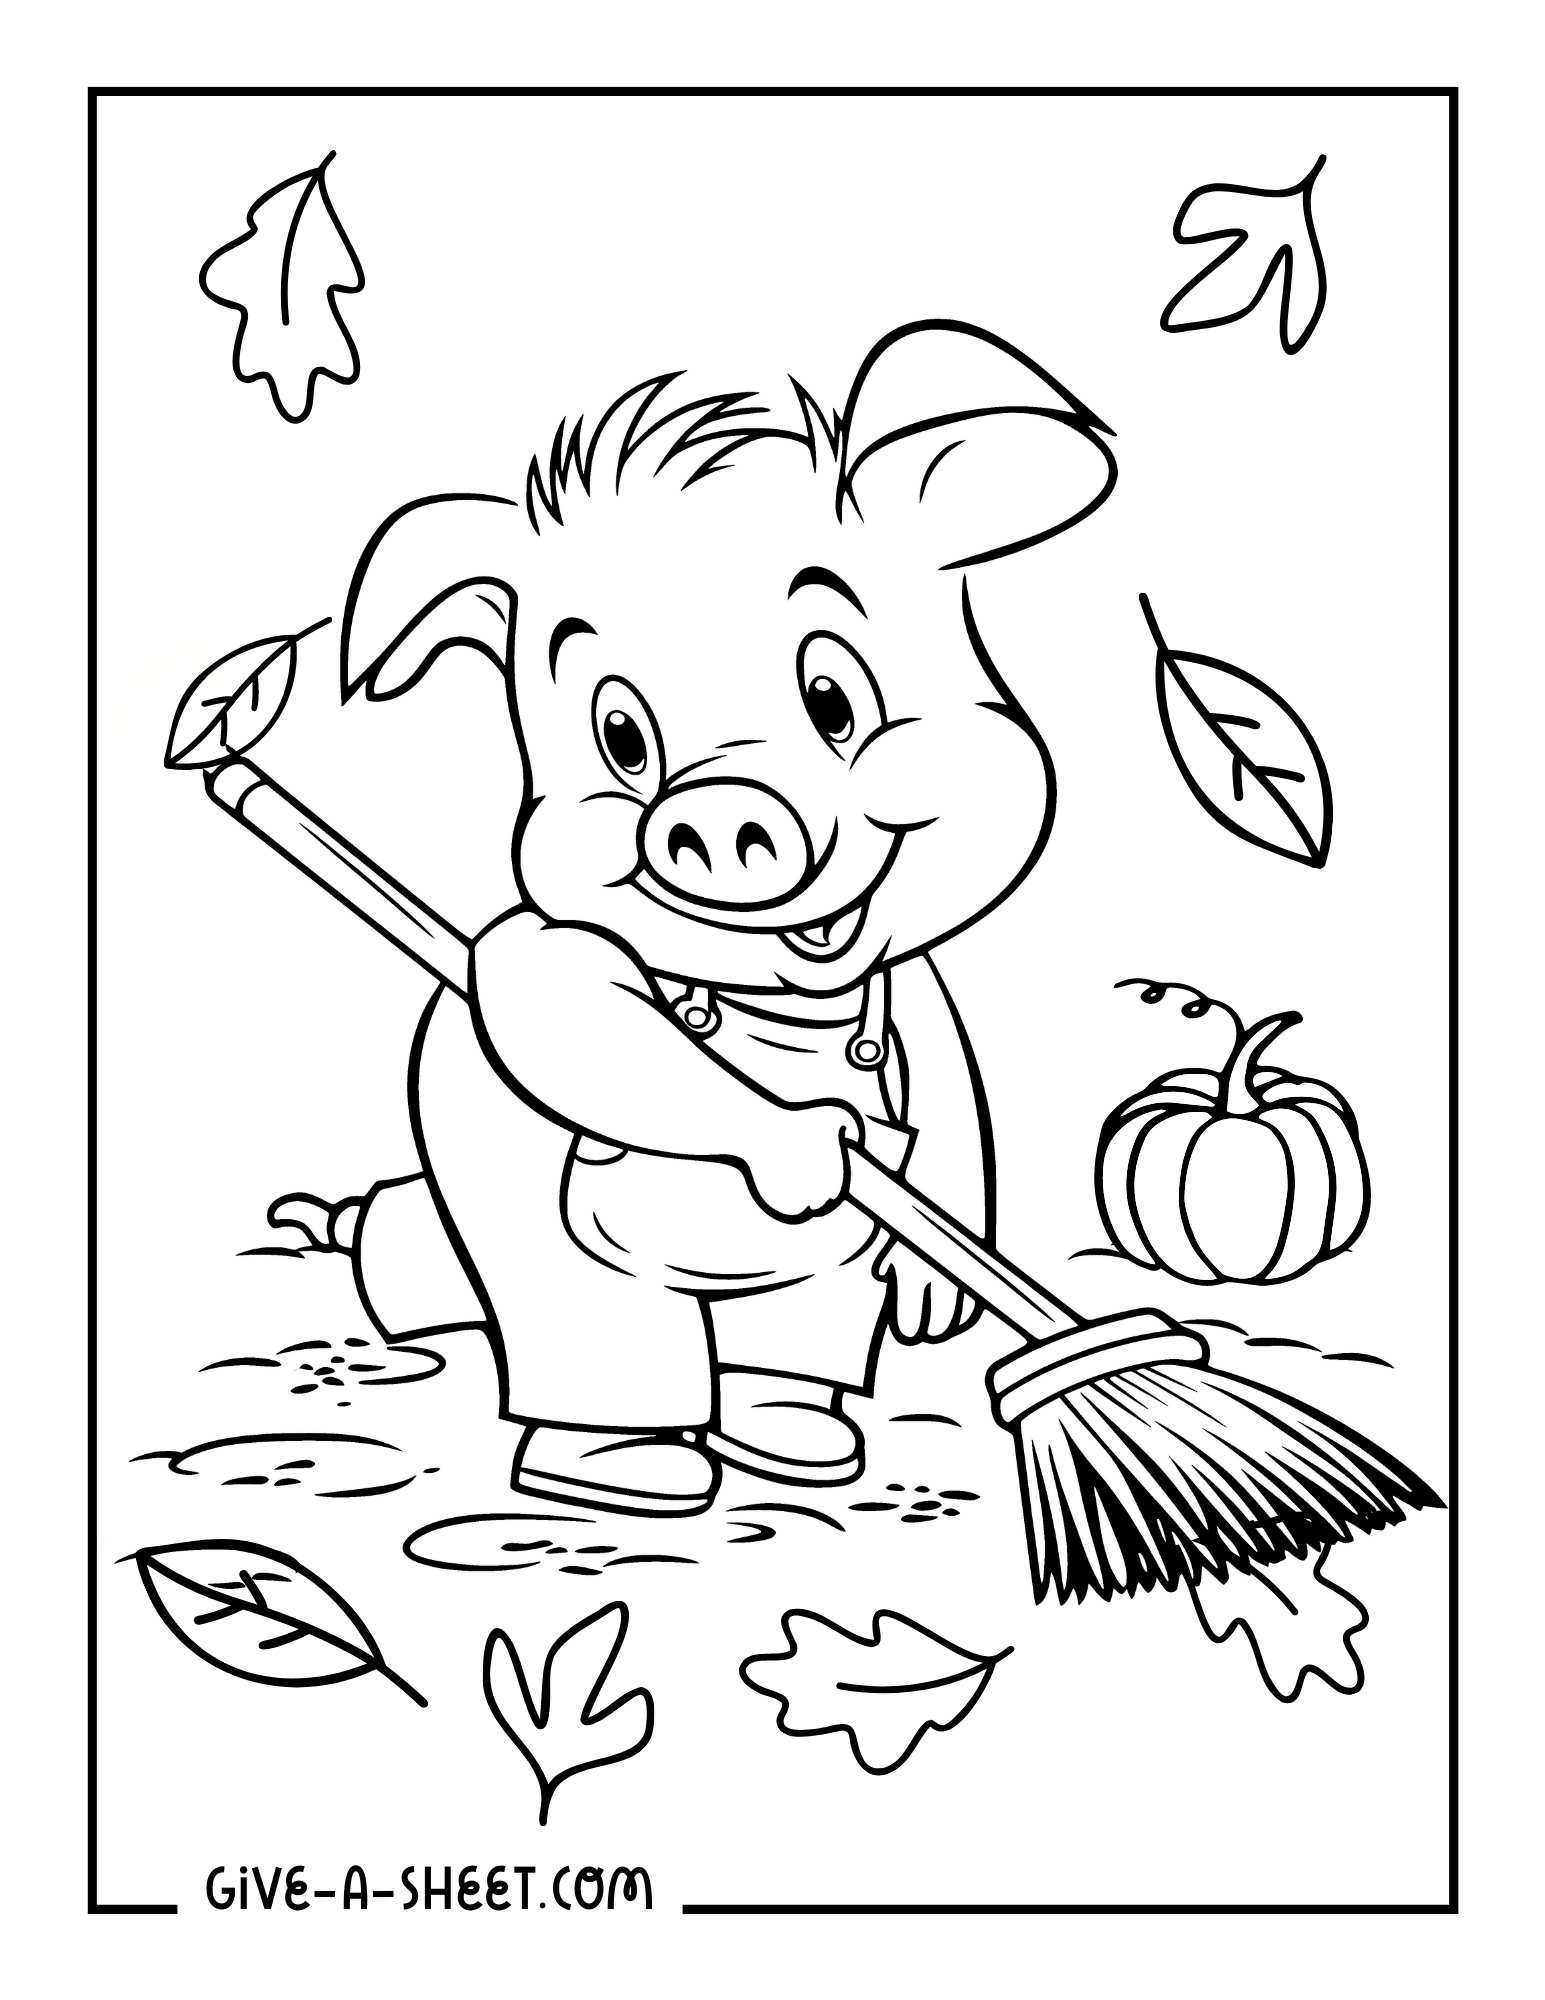 Cute pig raking fall leaf coloring sheet for kids.